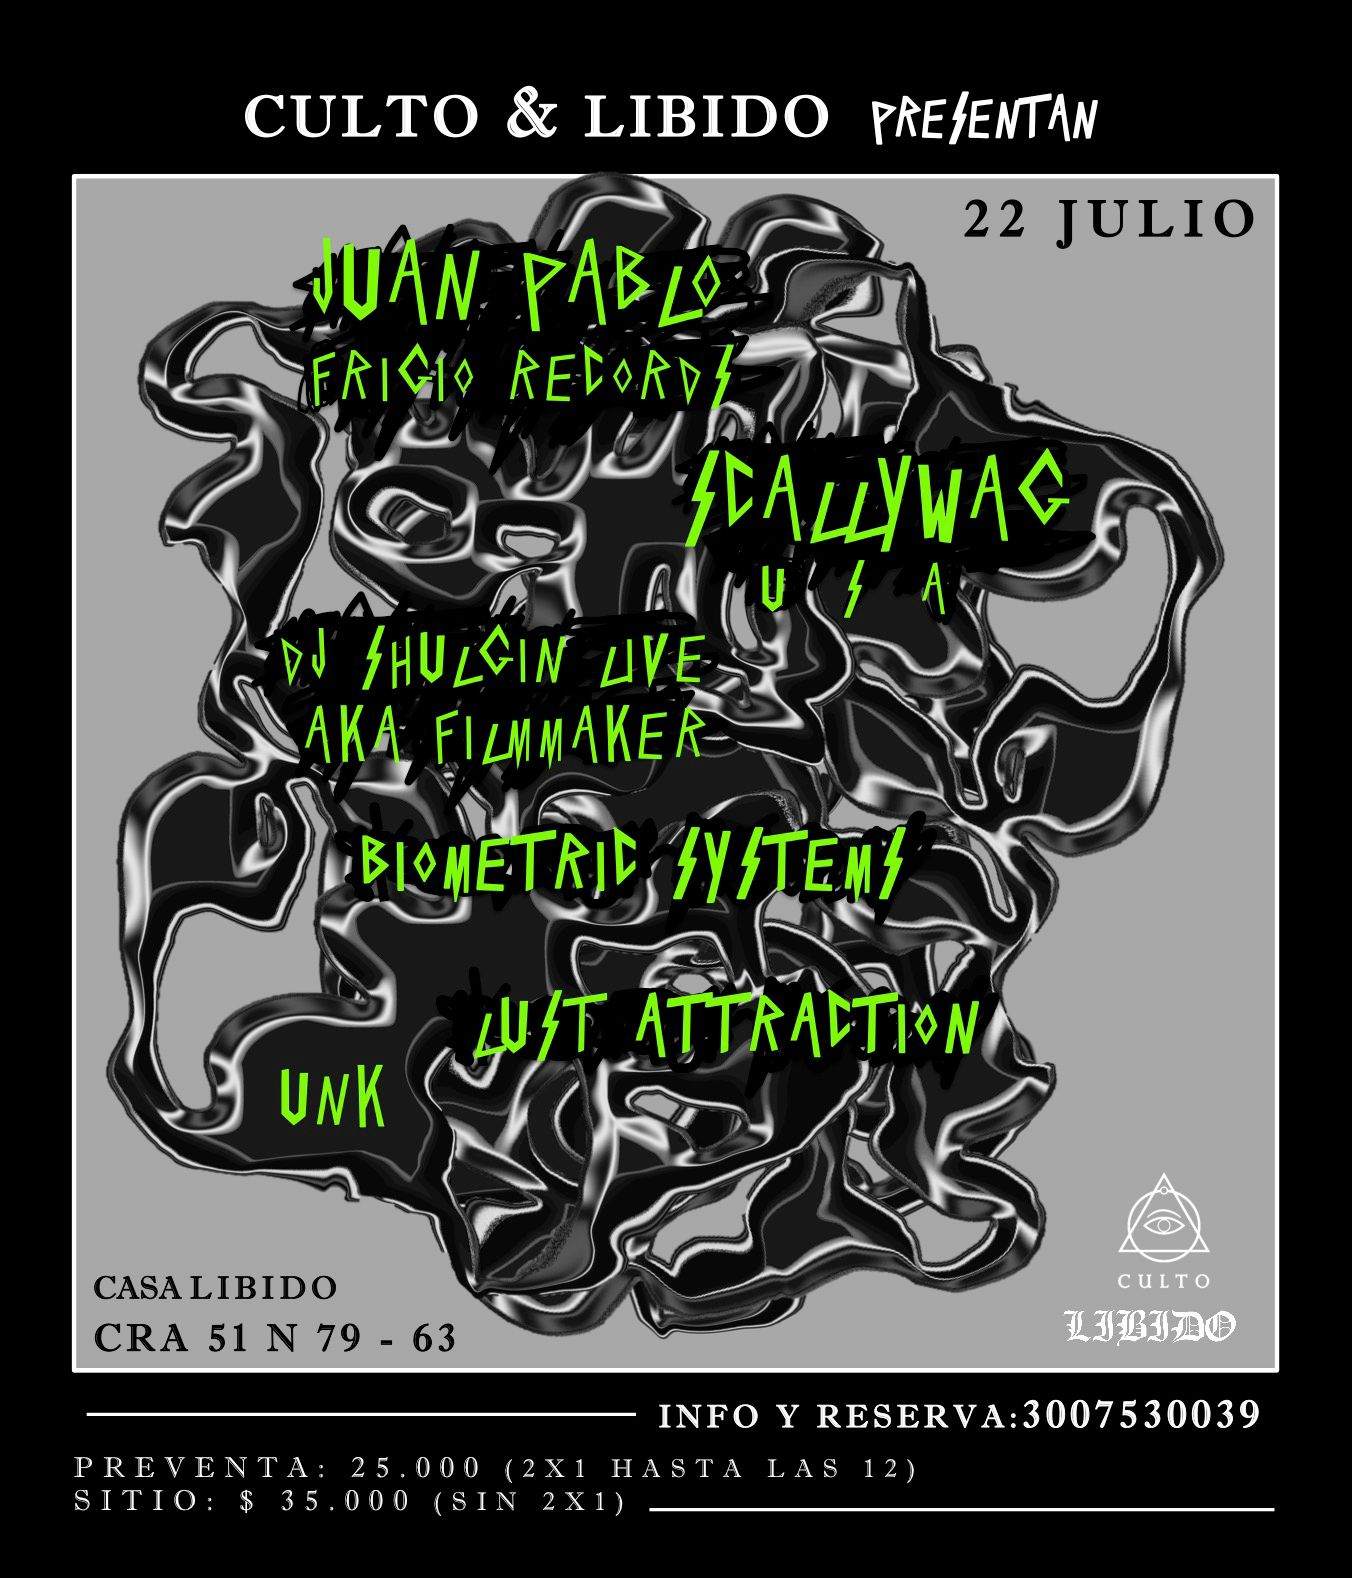 Culto & Libido Bar Pres. Juanpablo (Frigio records) - フライヤー表